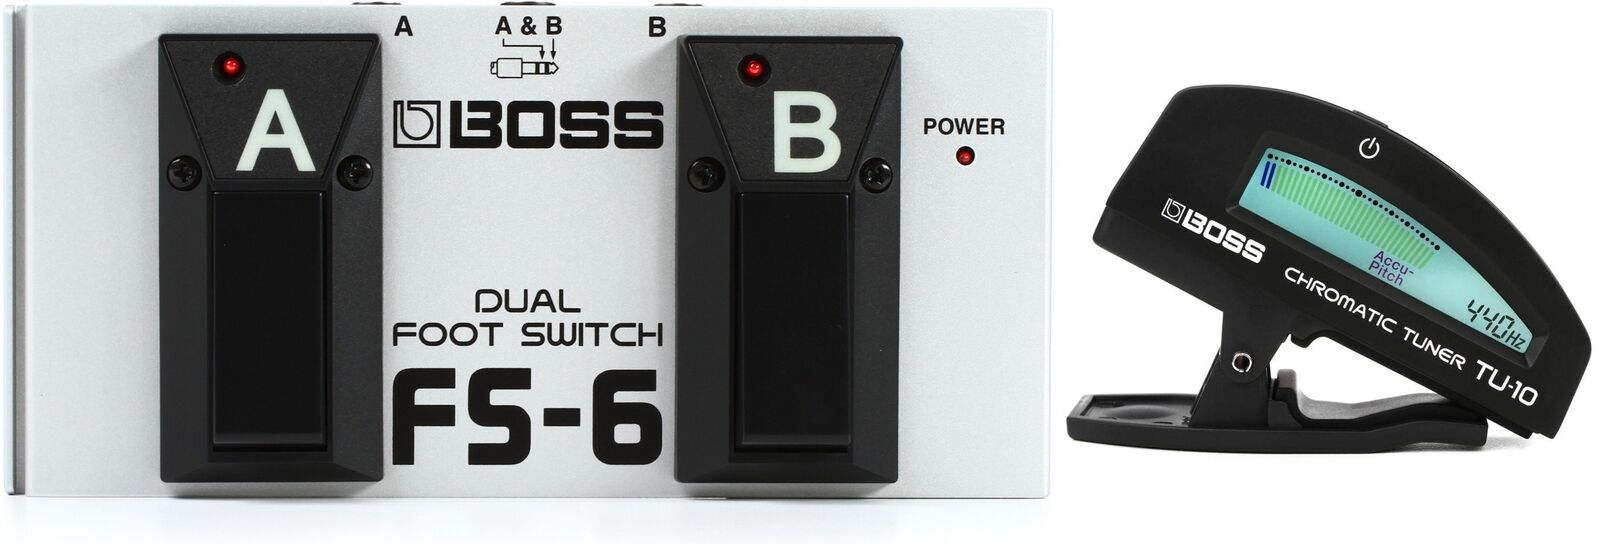 Boss Fs-6 Dual Foot Switch + Boss Tu-10 Clip-on Chromatic Tuner Value Bundle